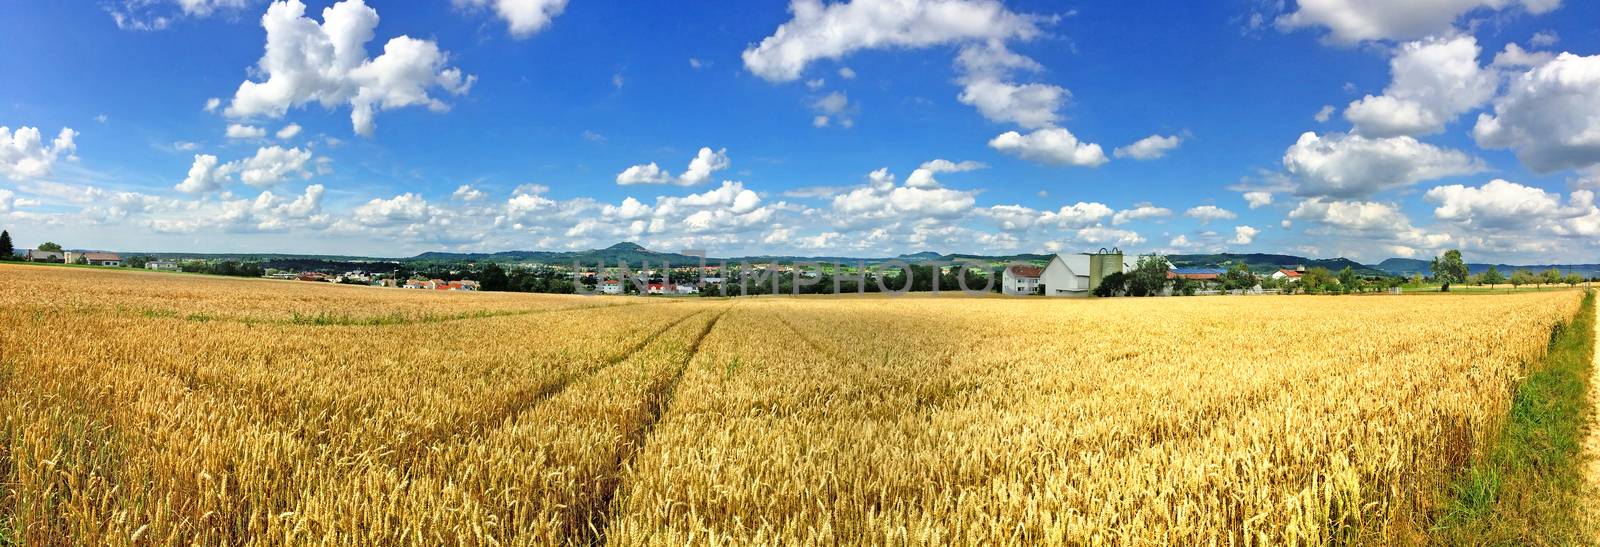 field of ripe rye with blue sky